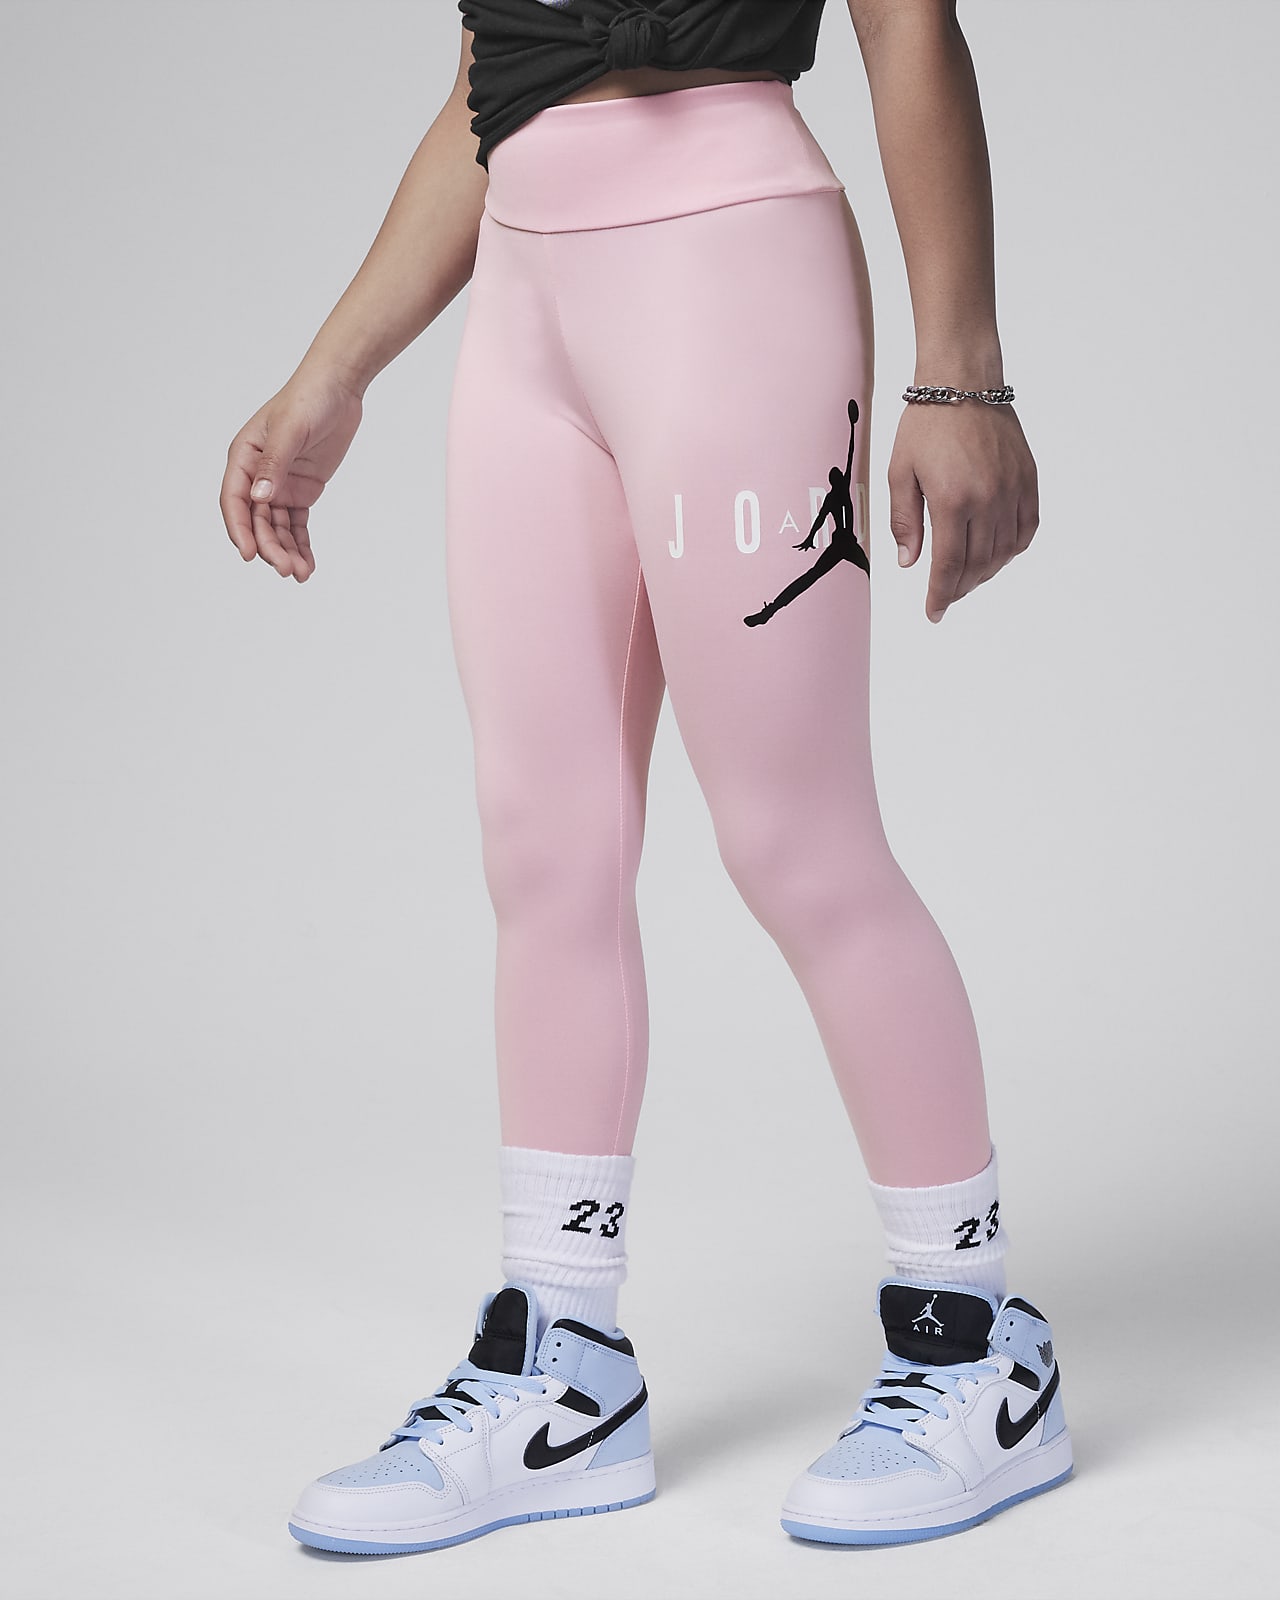  Jordan Pink Pack High Rise Leggings Girls Size Medium to X-Large  Color Black, Pink, Orange, and White (as1, Alpha, m, Regular): Clothing,  Shoes & Jewelry